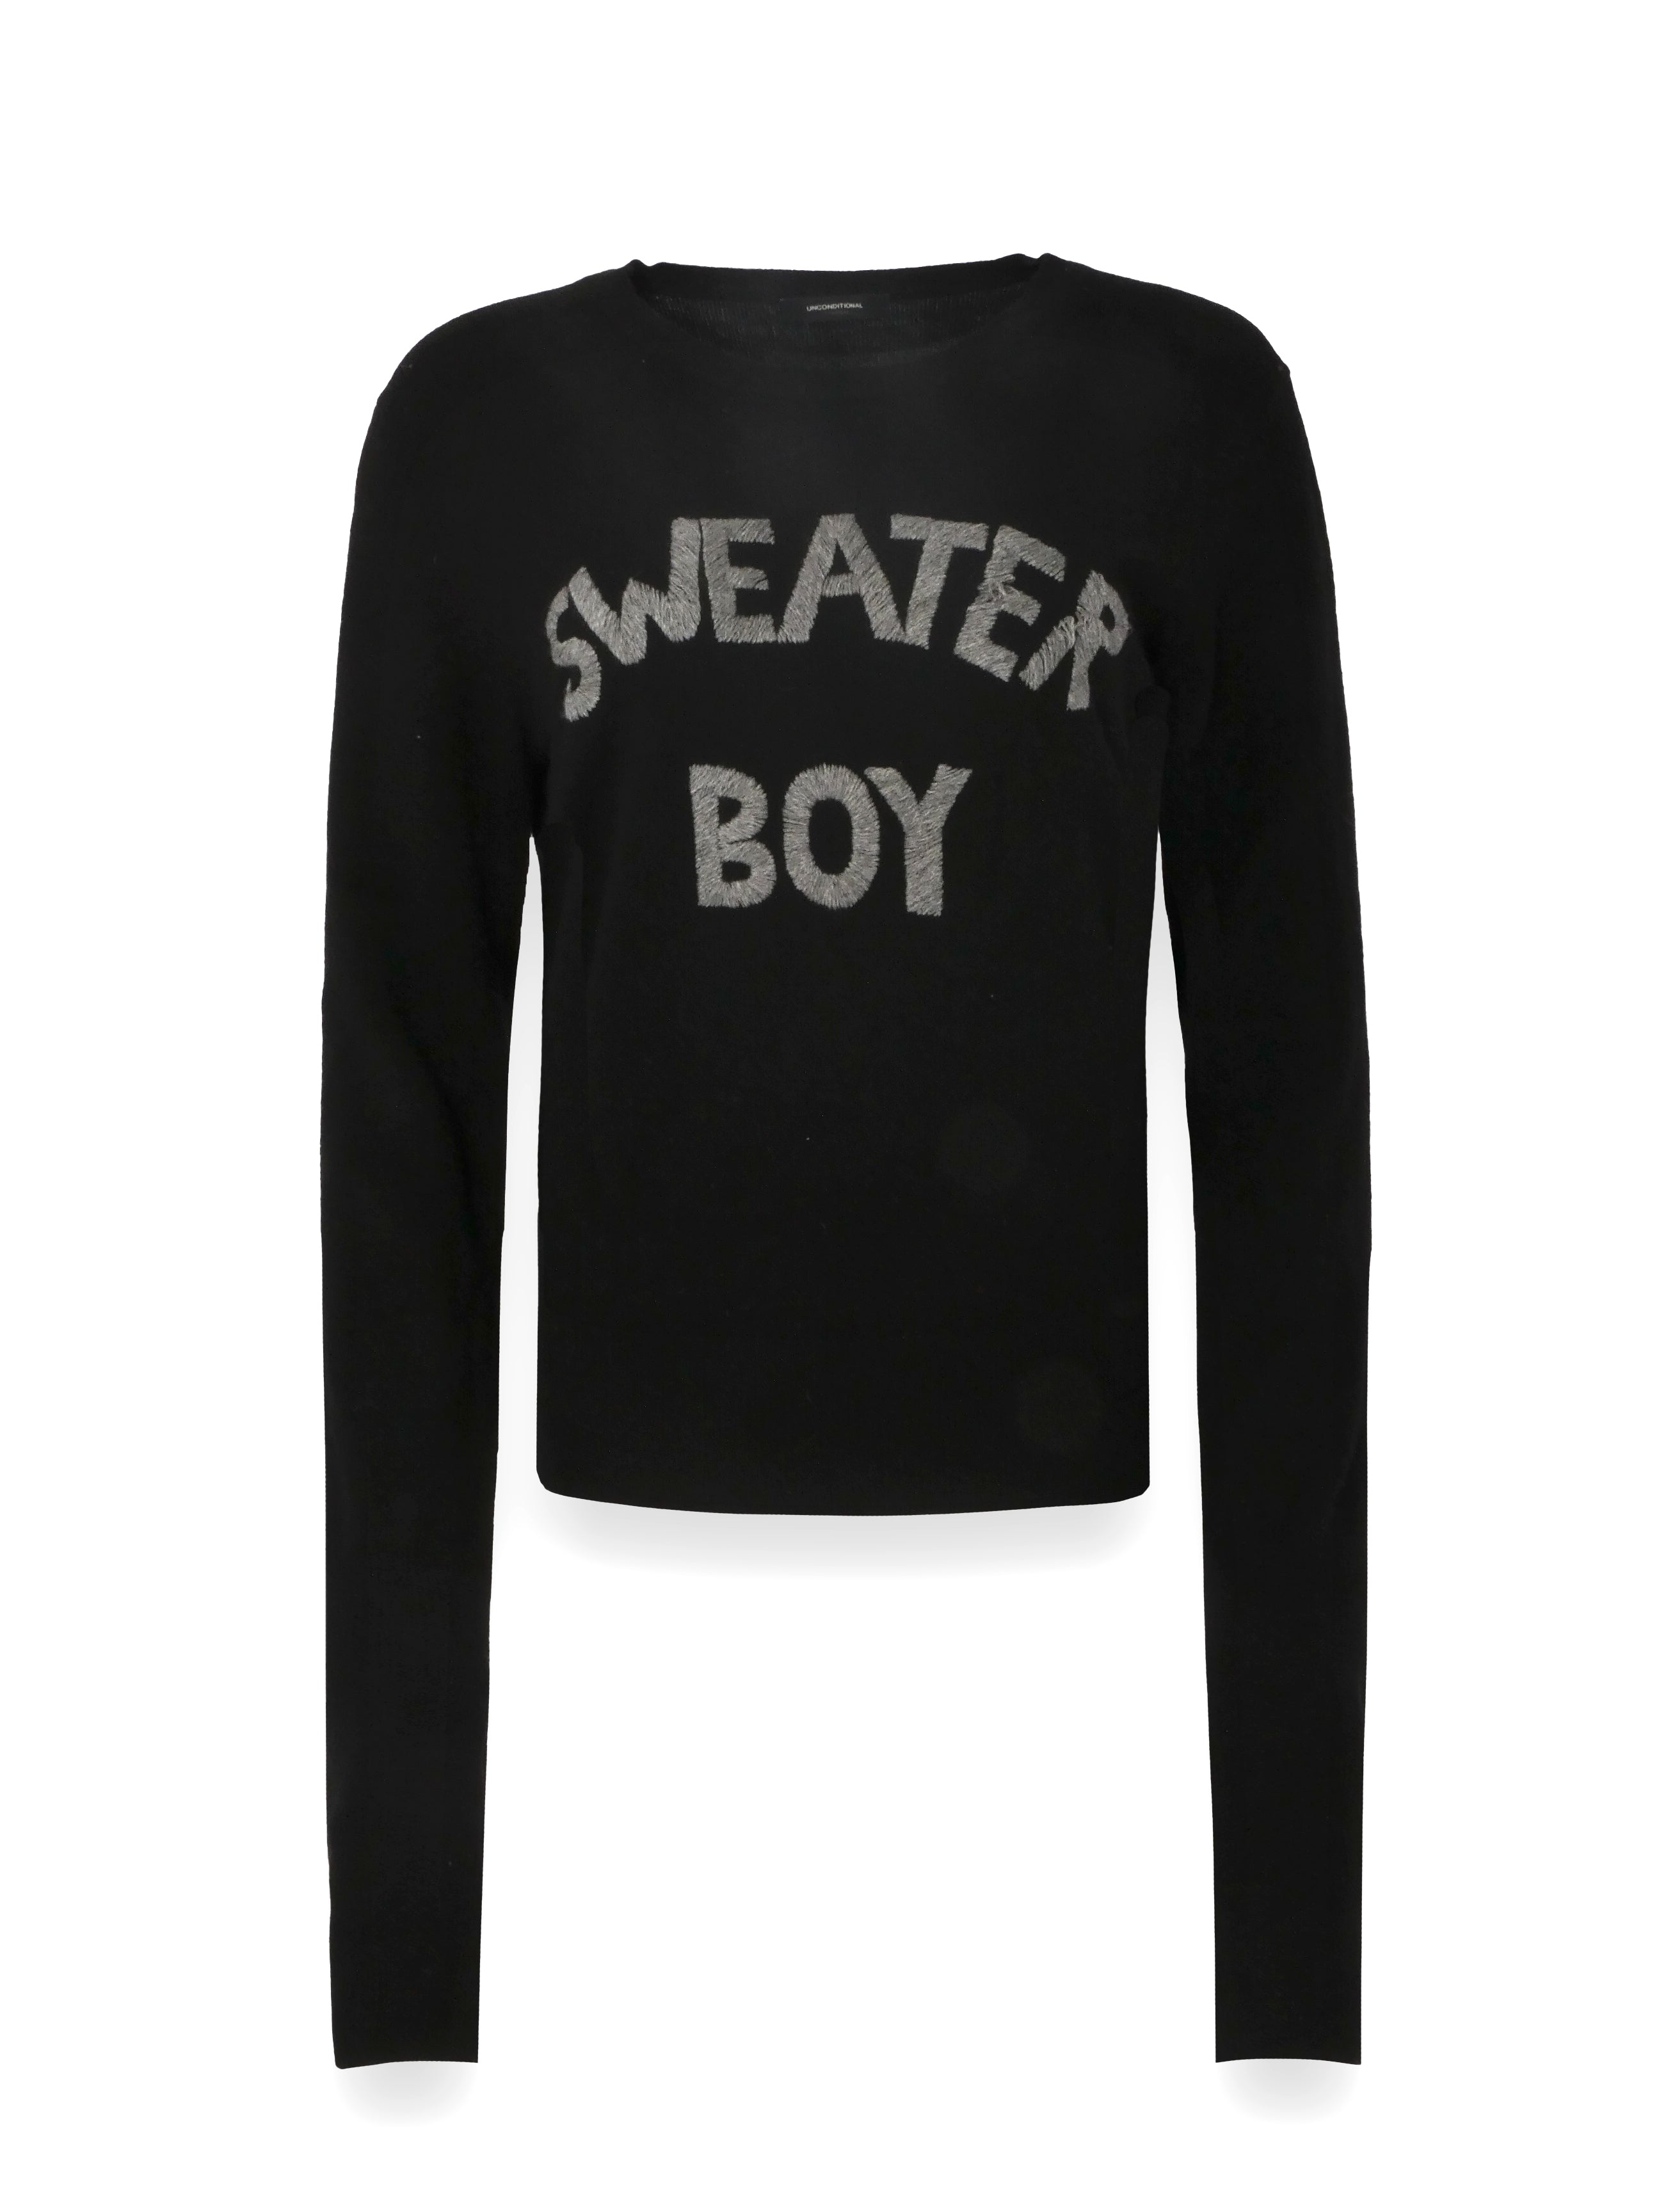 'Sweater Boy' Jumper